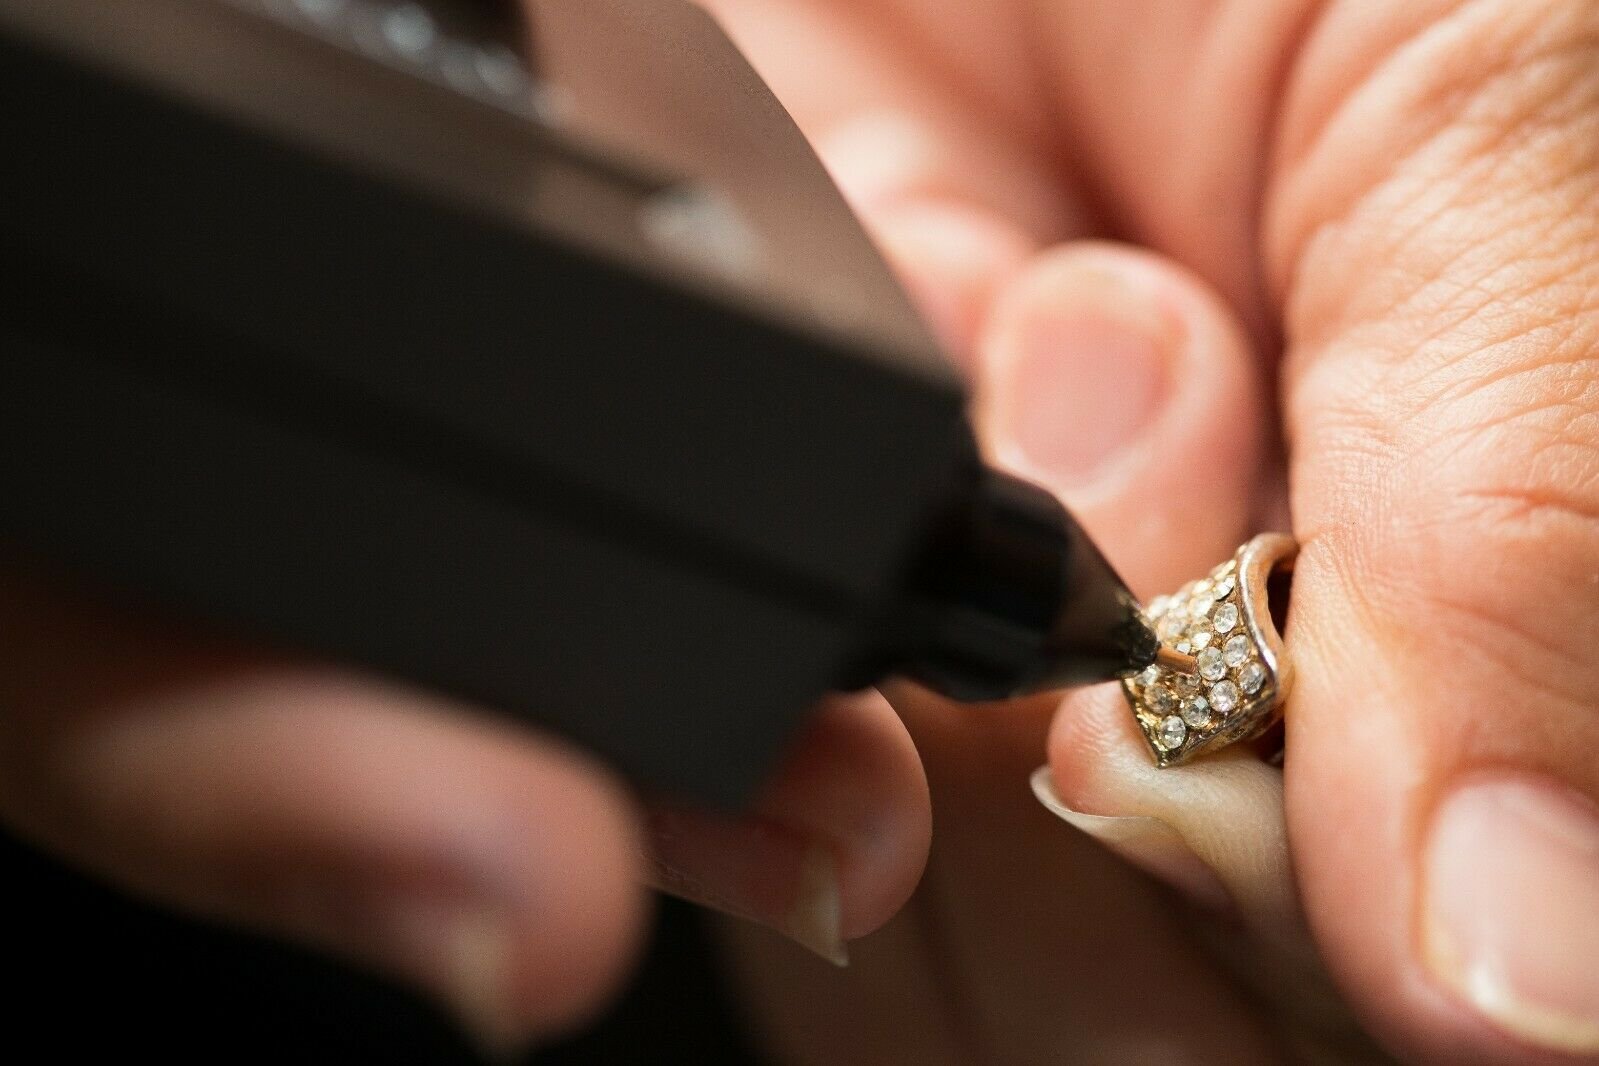 GTE Gold Silver Diamond Tester Selector Gemstone Jewelers Testing Kit –  GOLD TESTING EQUIPMENT